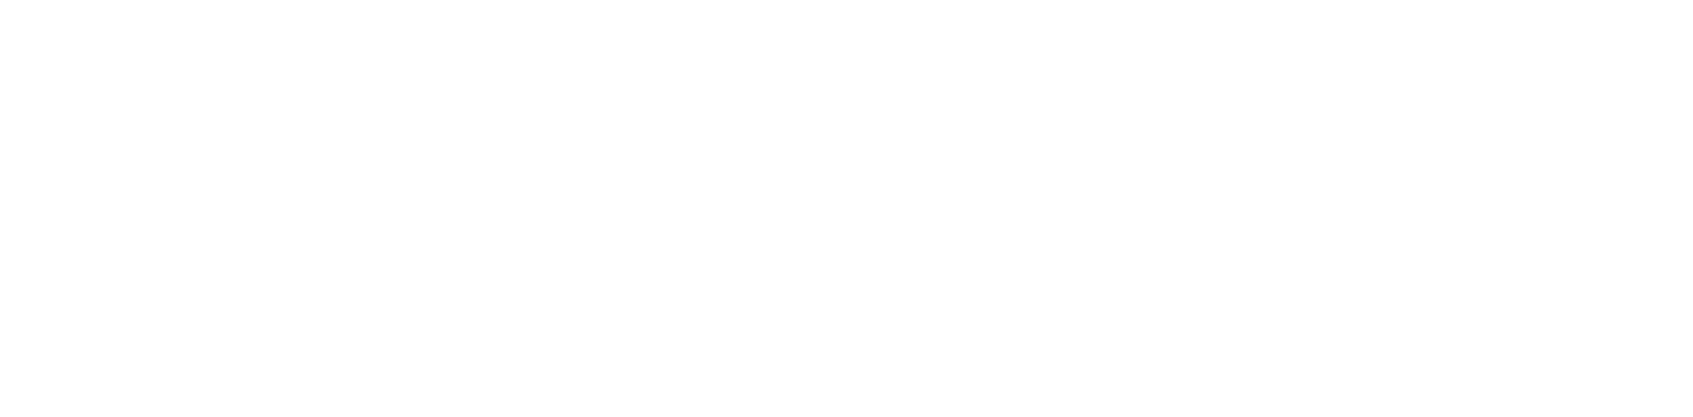 Futu Holdings logo large for dark backgrounds (transparent PNG)